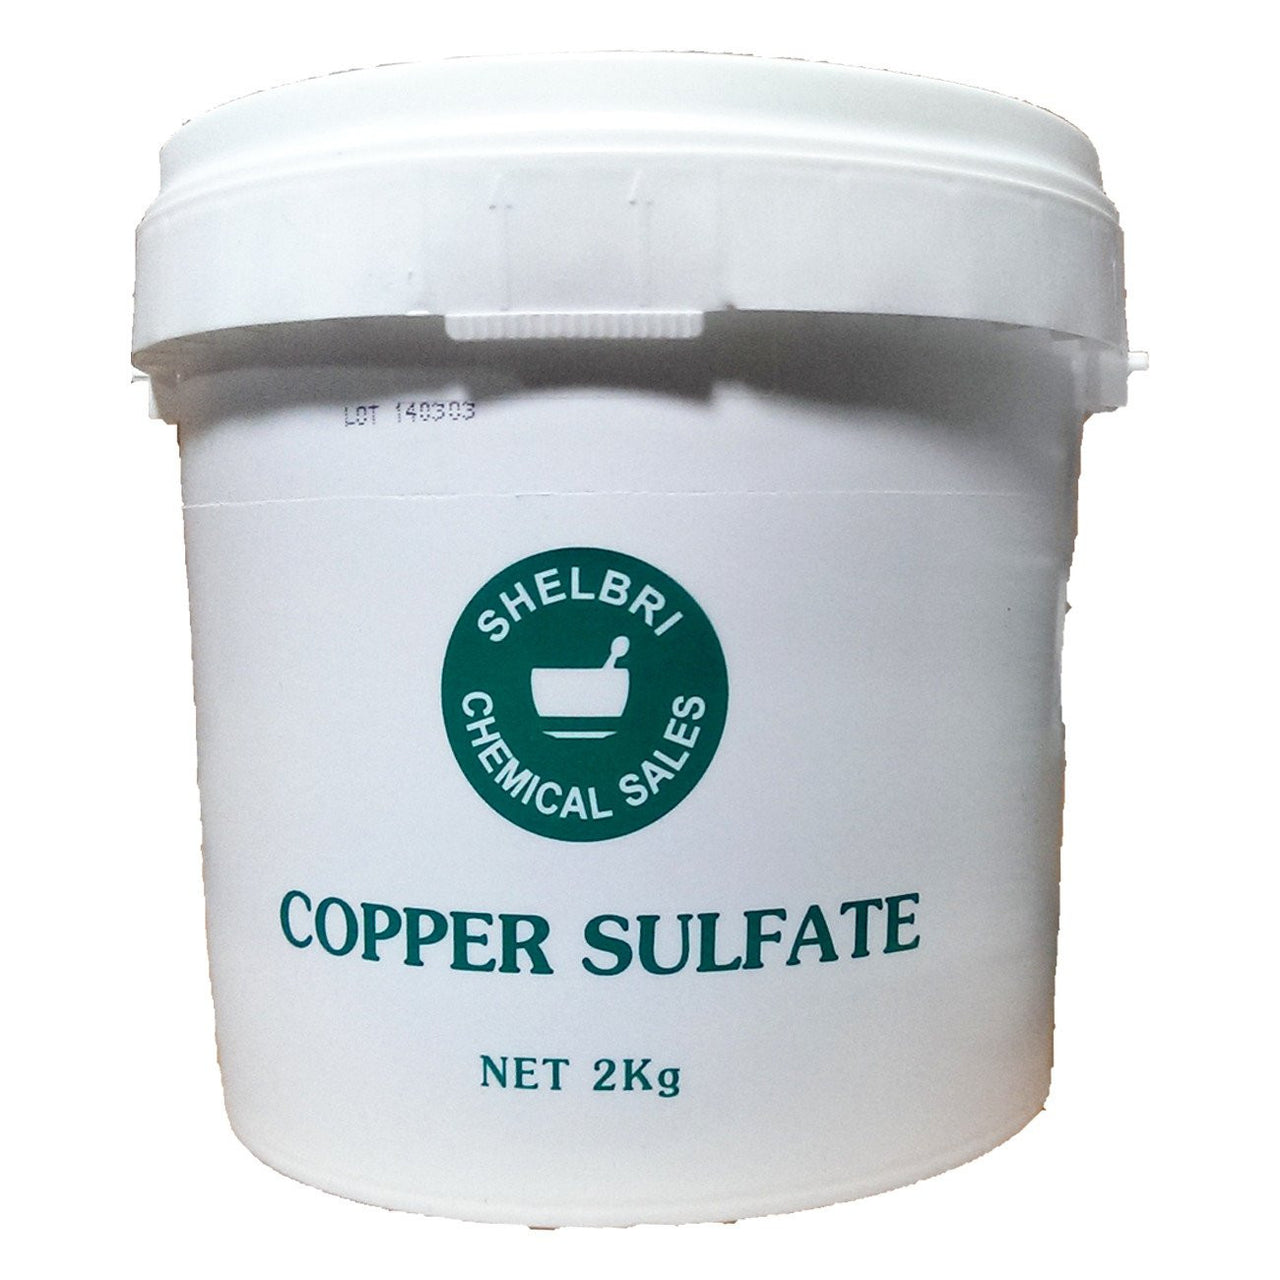 Shelbri Copper Sulfate 2Kg - Equine Supplements Shelbri - Canada